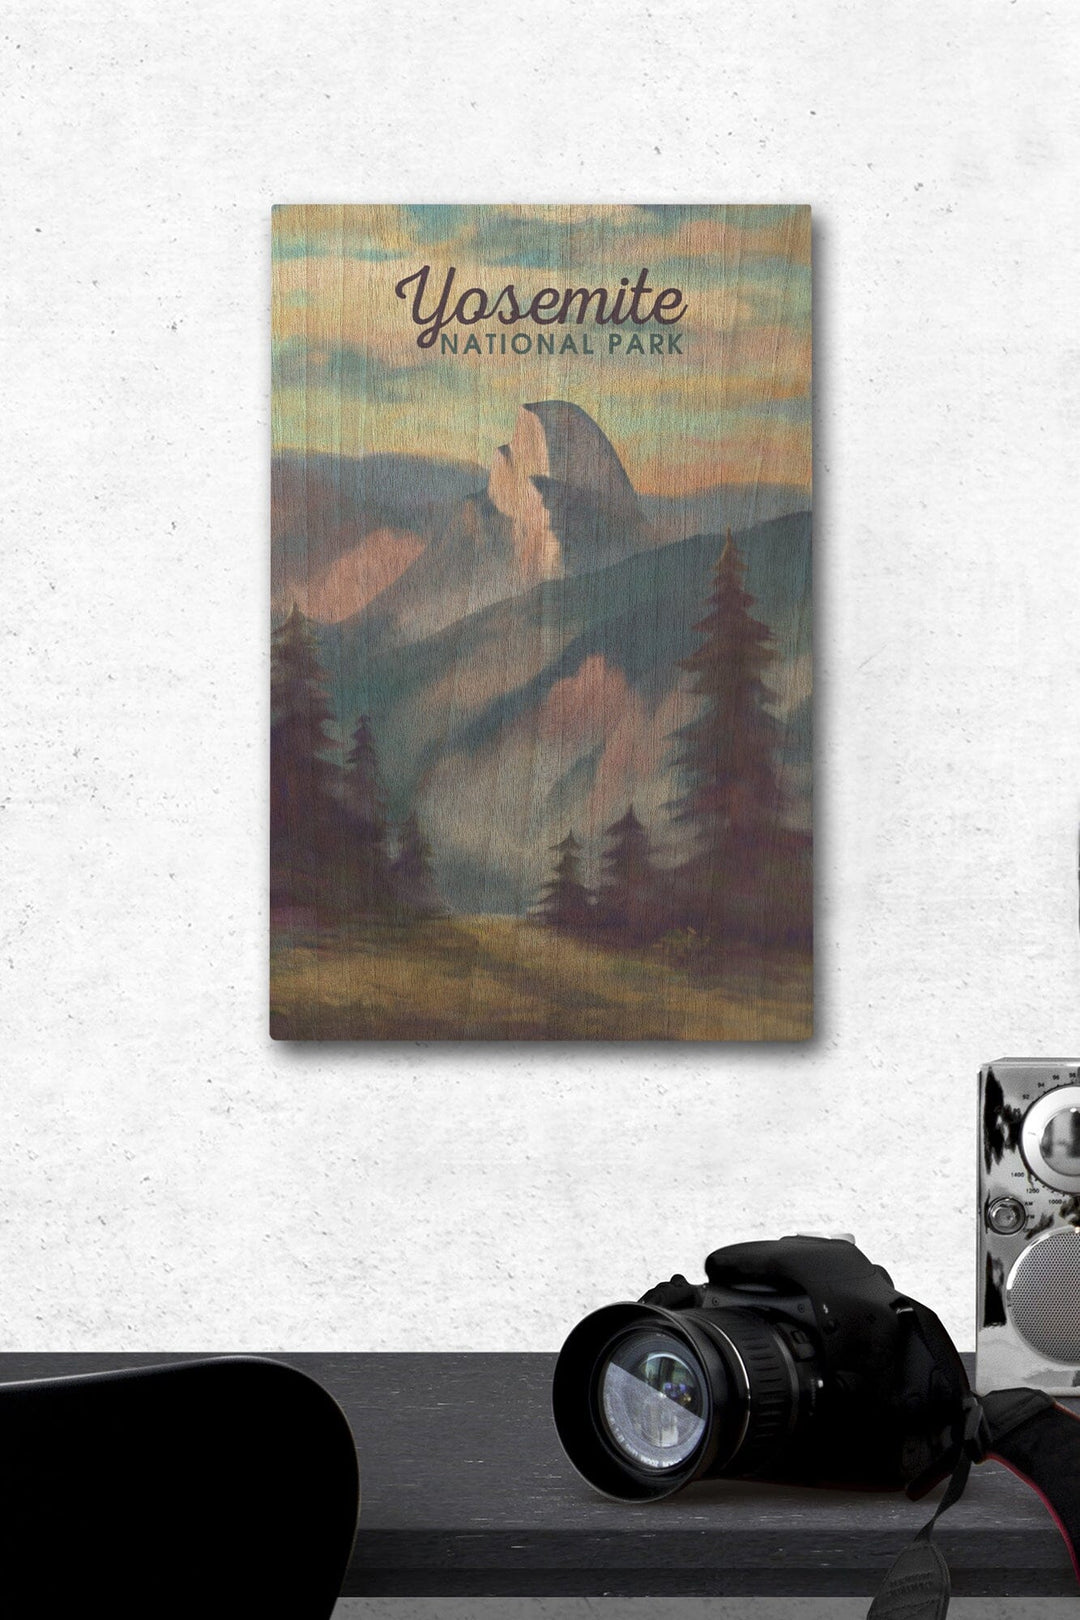 Yosemite National Park, California, Half Dome Scene, Oil Painting, Lantern Press Artwork, Wood Signs and Postcards Wood Lantern Press 12 x 18 Wood Gallery Print 